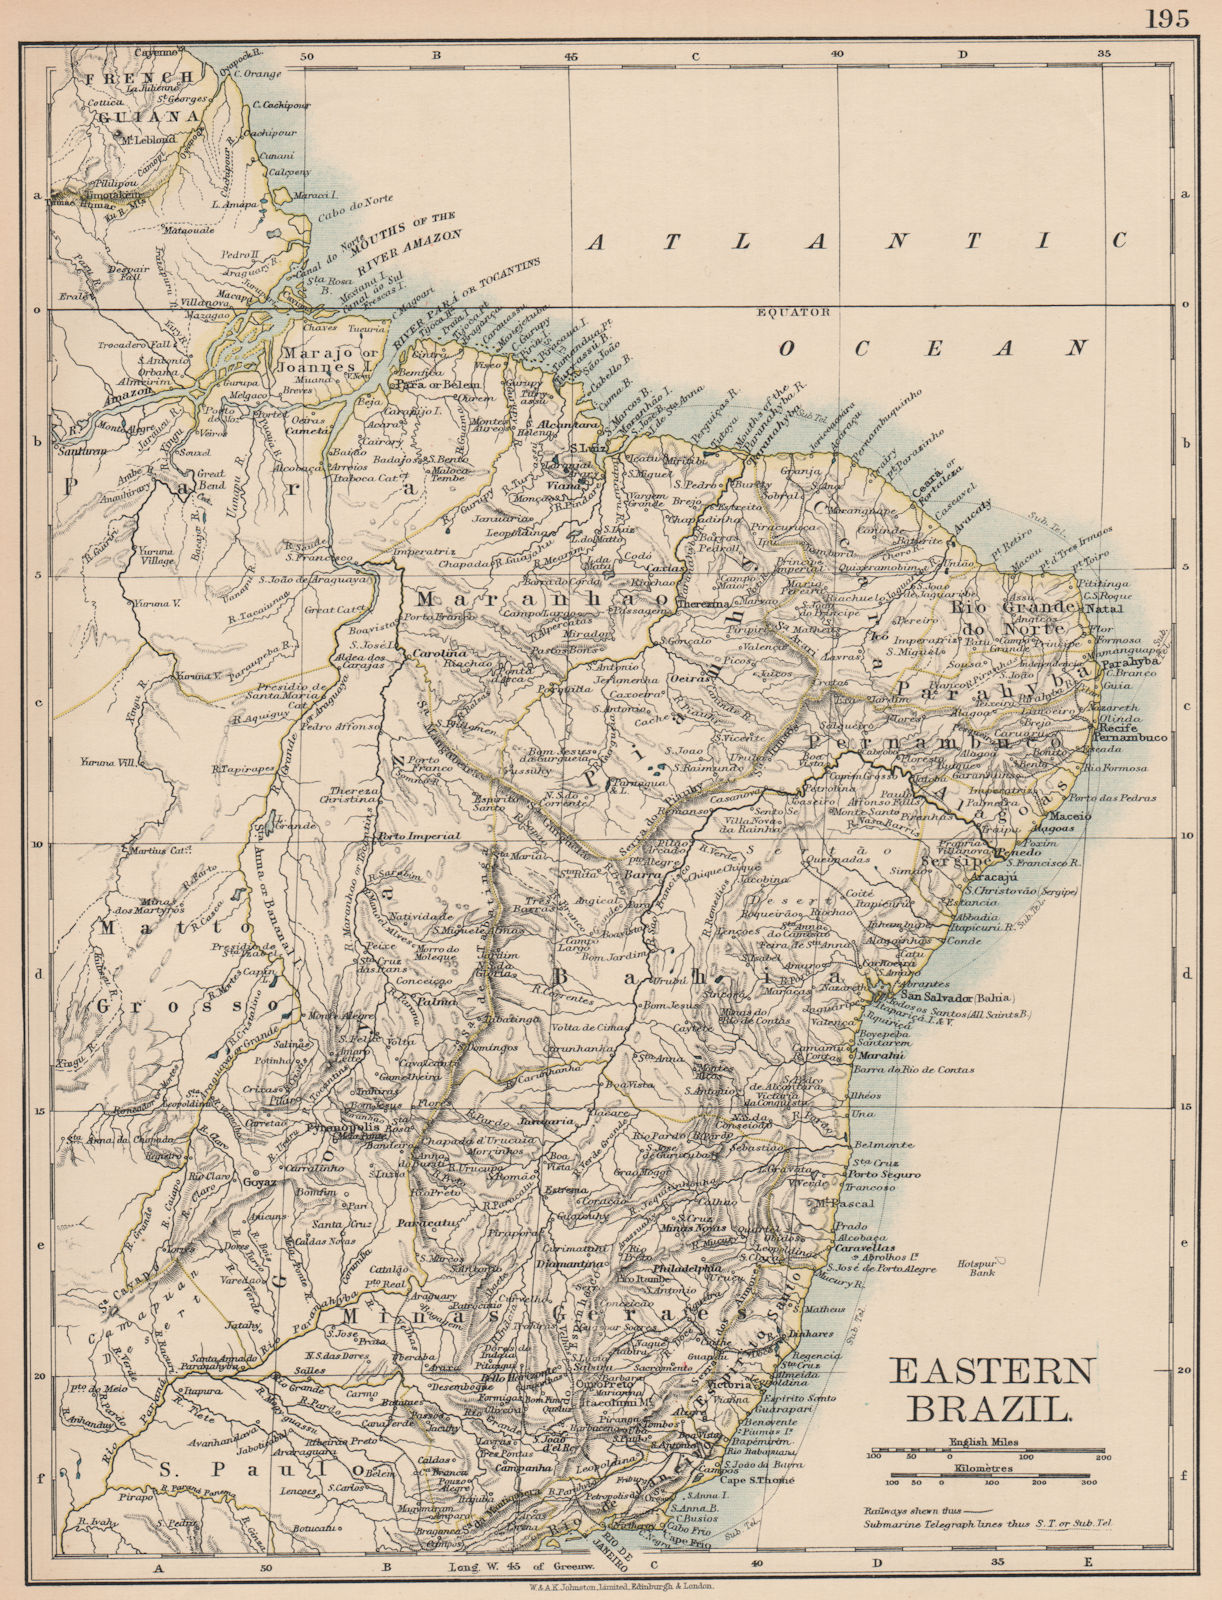 EASTERN BRAZIL. Bahia Minas Gerais Pernambuco Marabhao. JOHNSTON 1906 old map